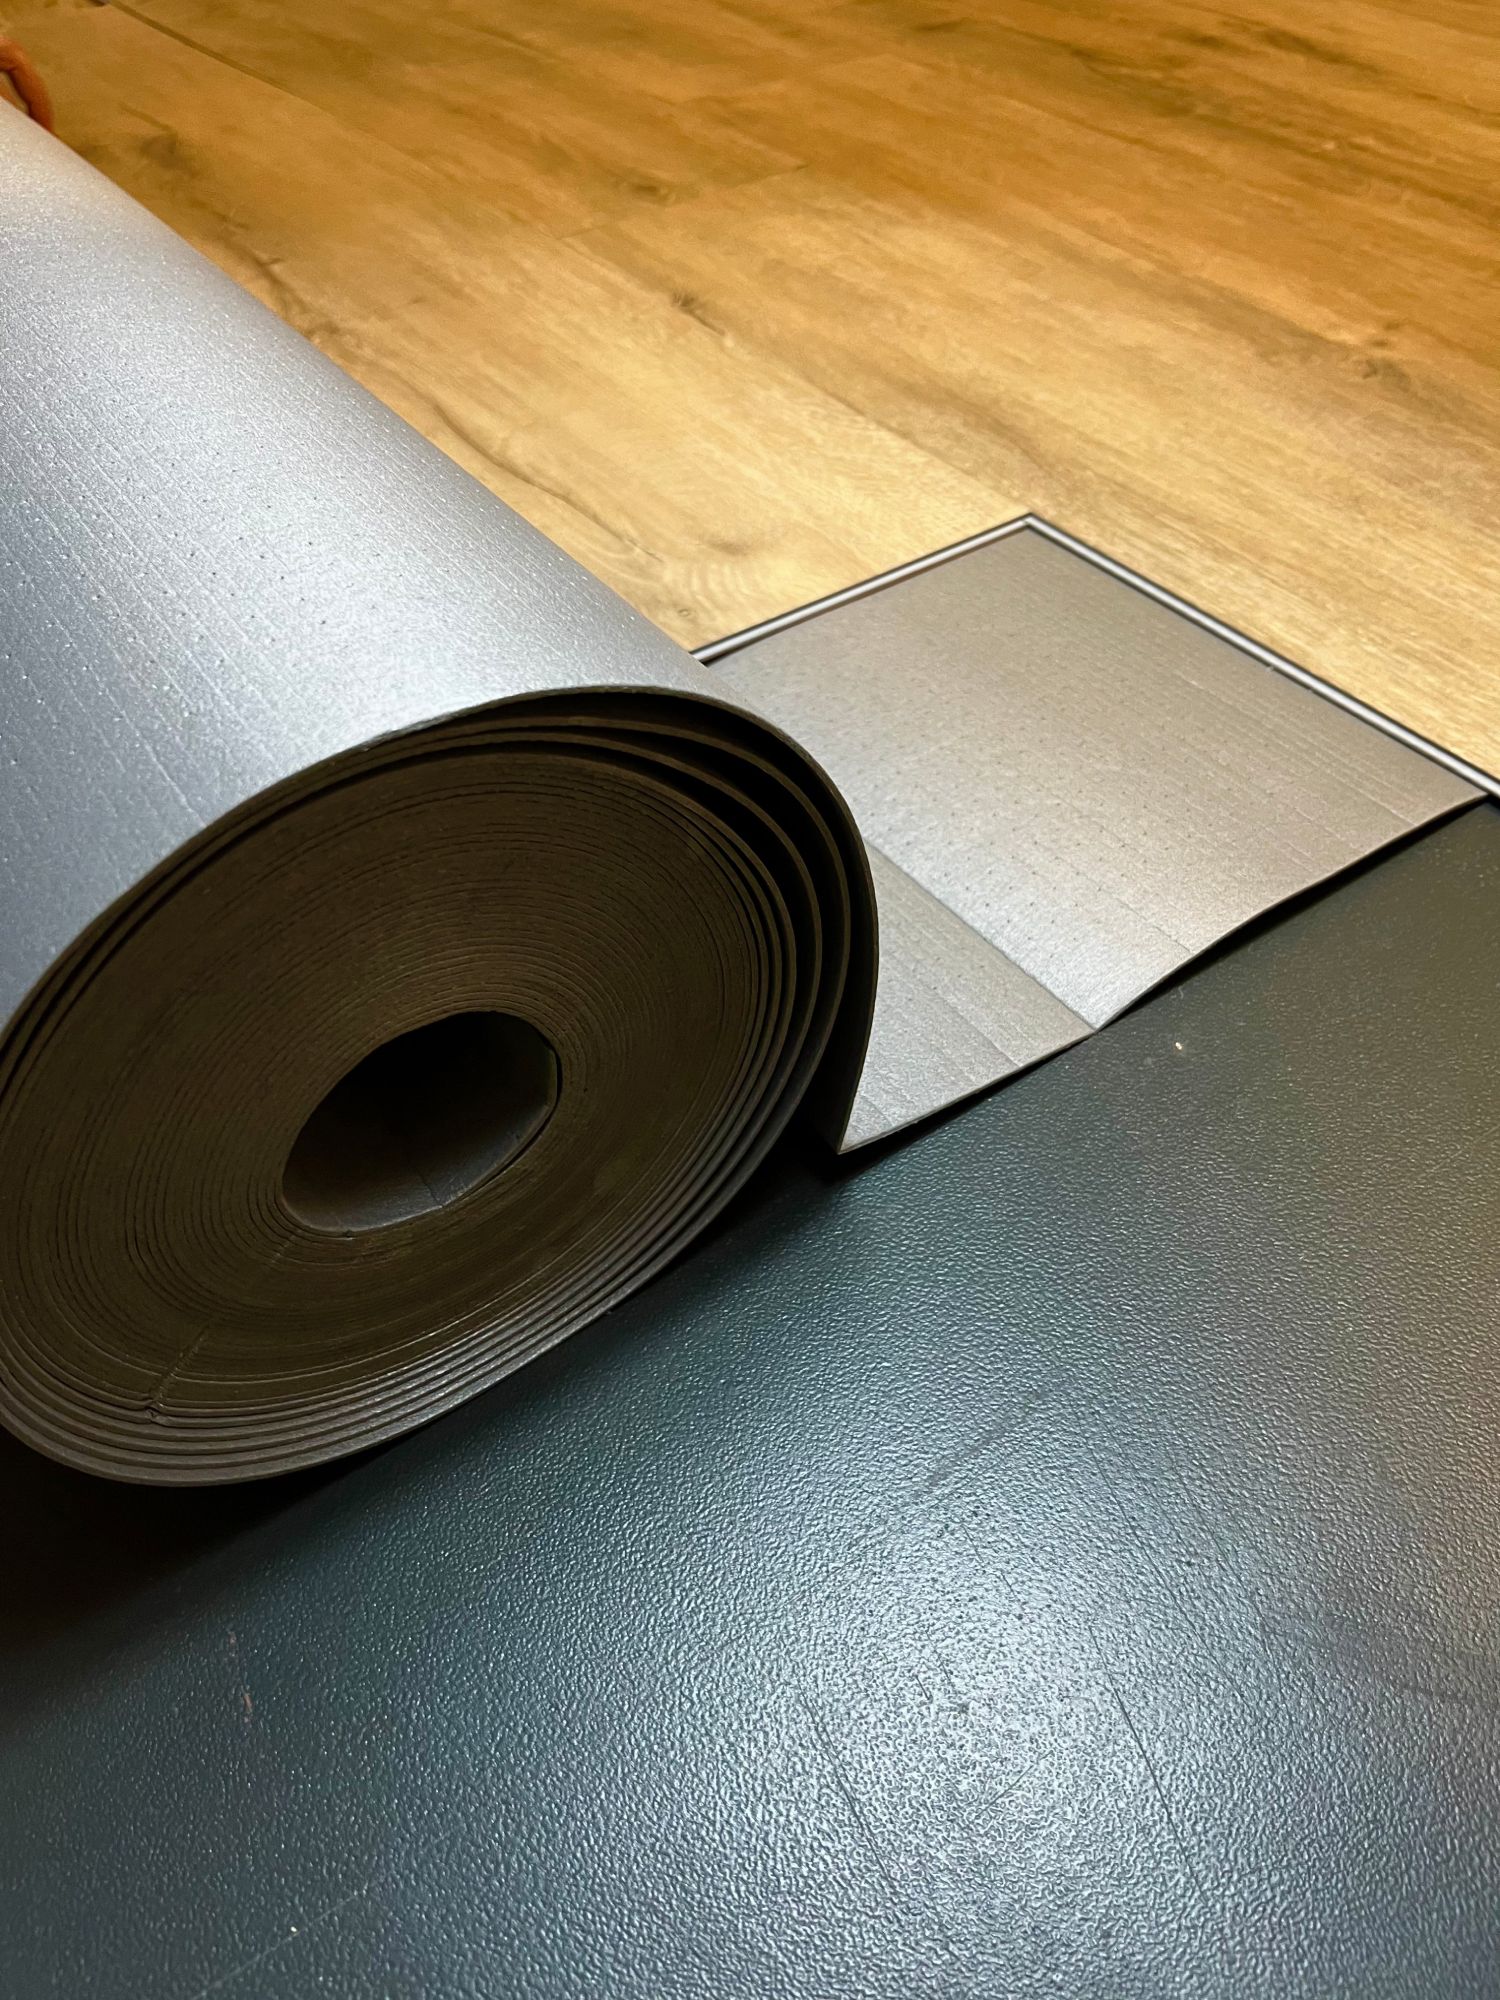 Podložka pod podlahu Profi Floor 2 mm 16,5 m2 - role šedá (48 rolí, 792 m2 paleta)